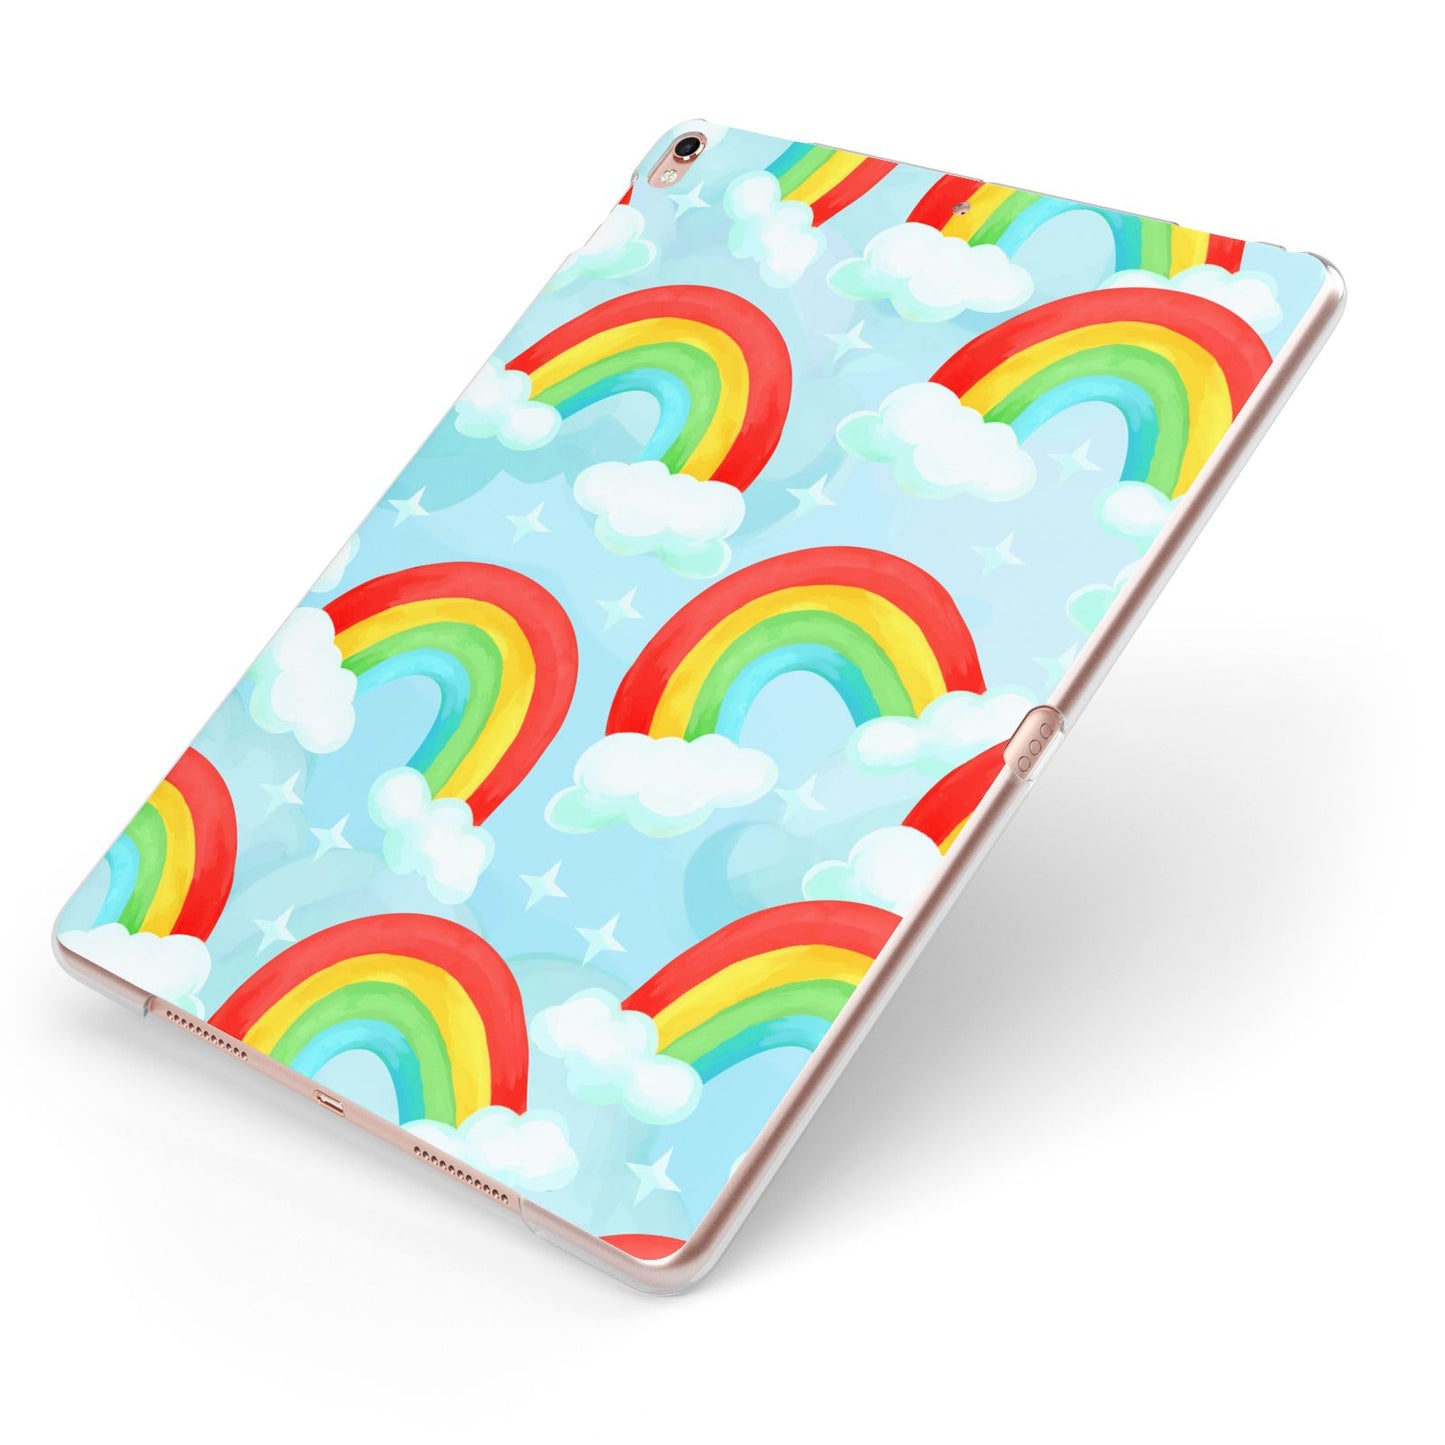 Rainbow Sky Apple iPad Case on Rose Gold iPad Side View